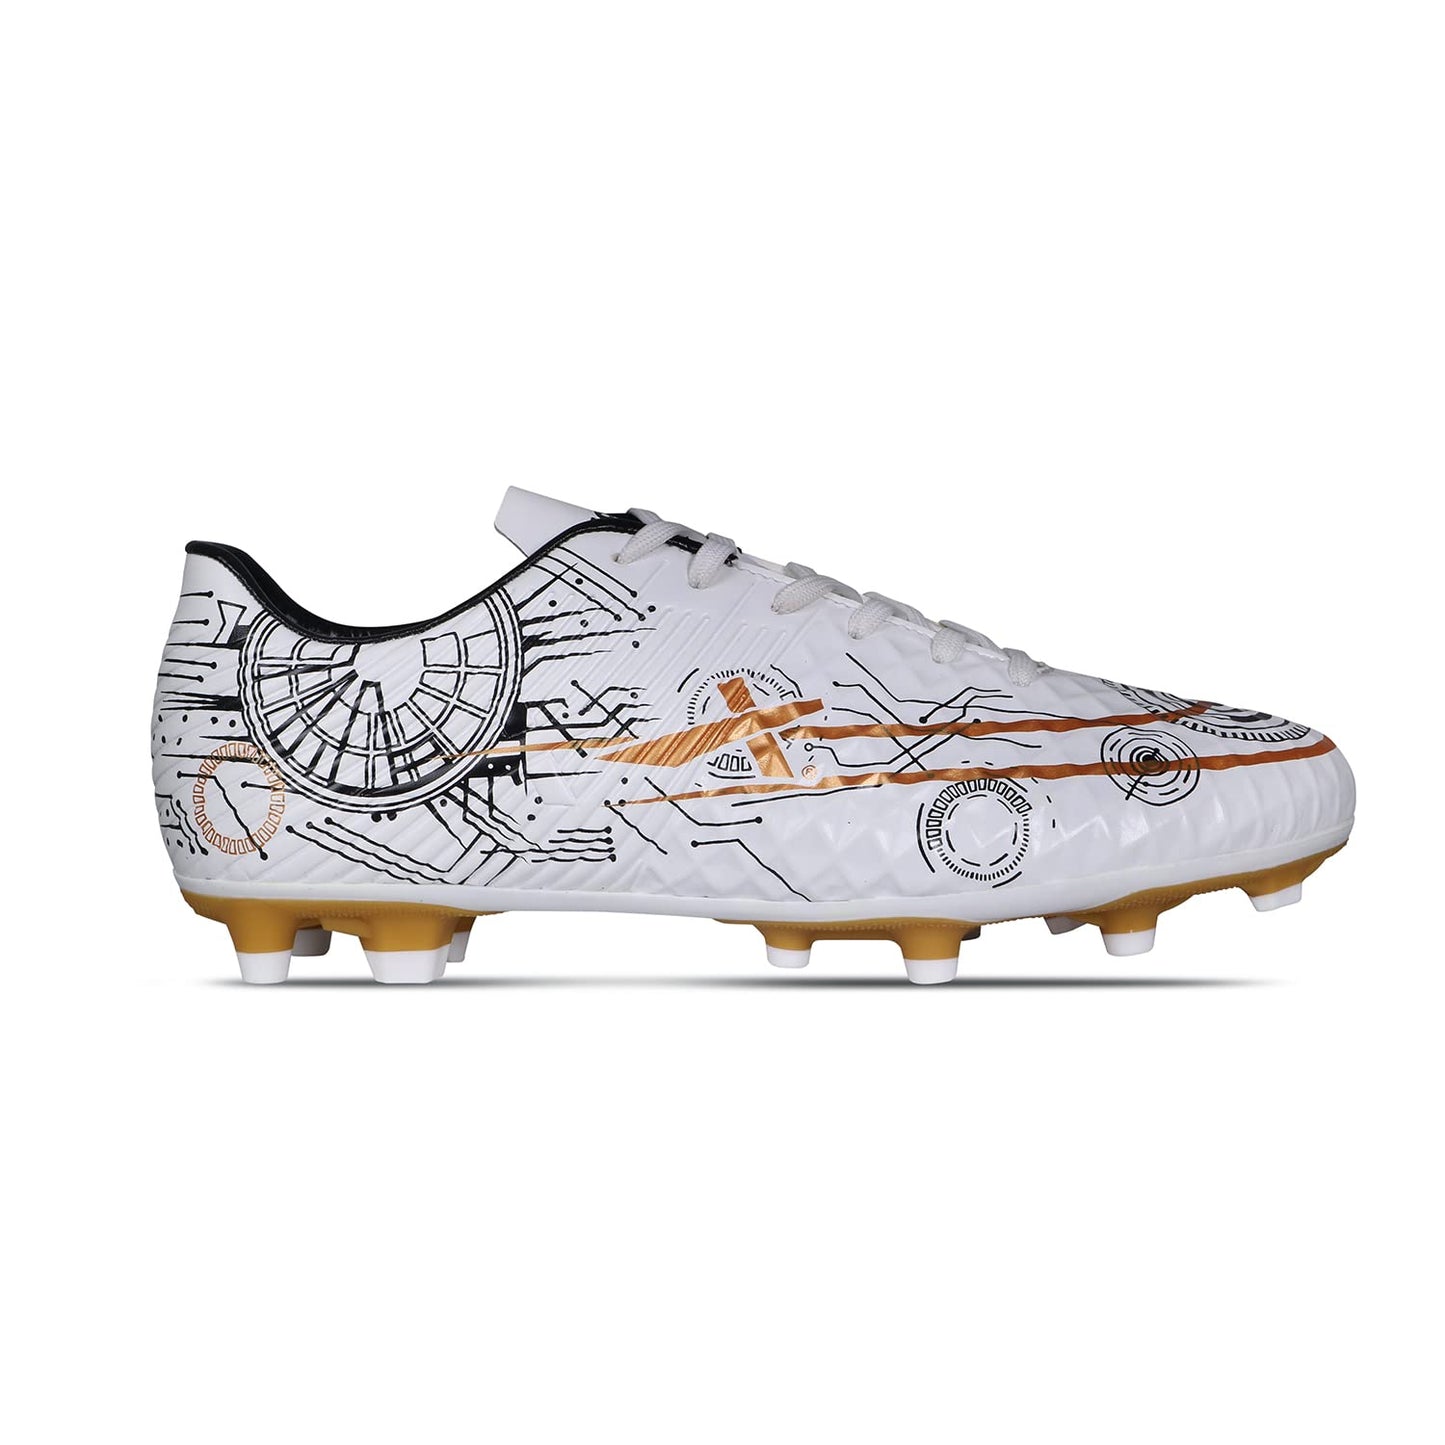 Vector X Hydra X Football Shoe, White/Black/Gold - Best Price online Prokicksports.com